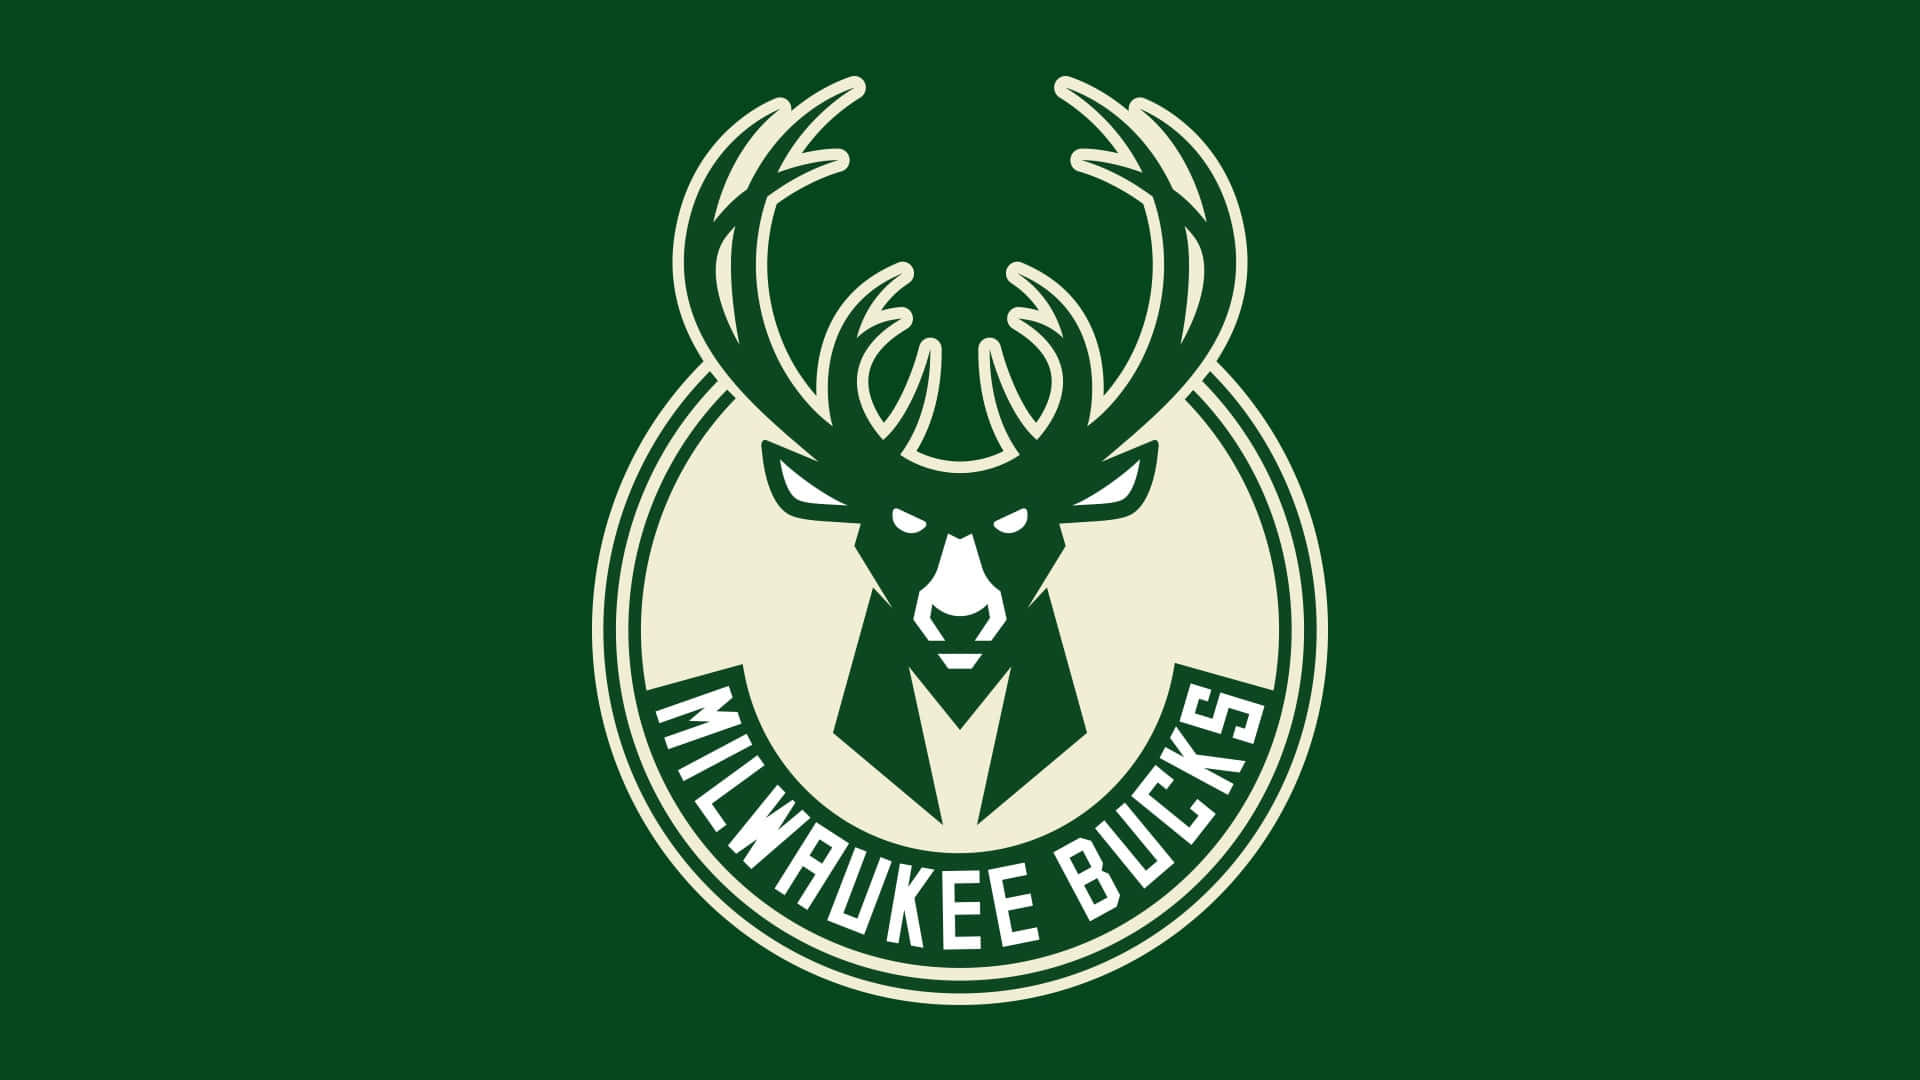 Milwaukeebucks Logo In German Would Be 